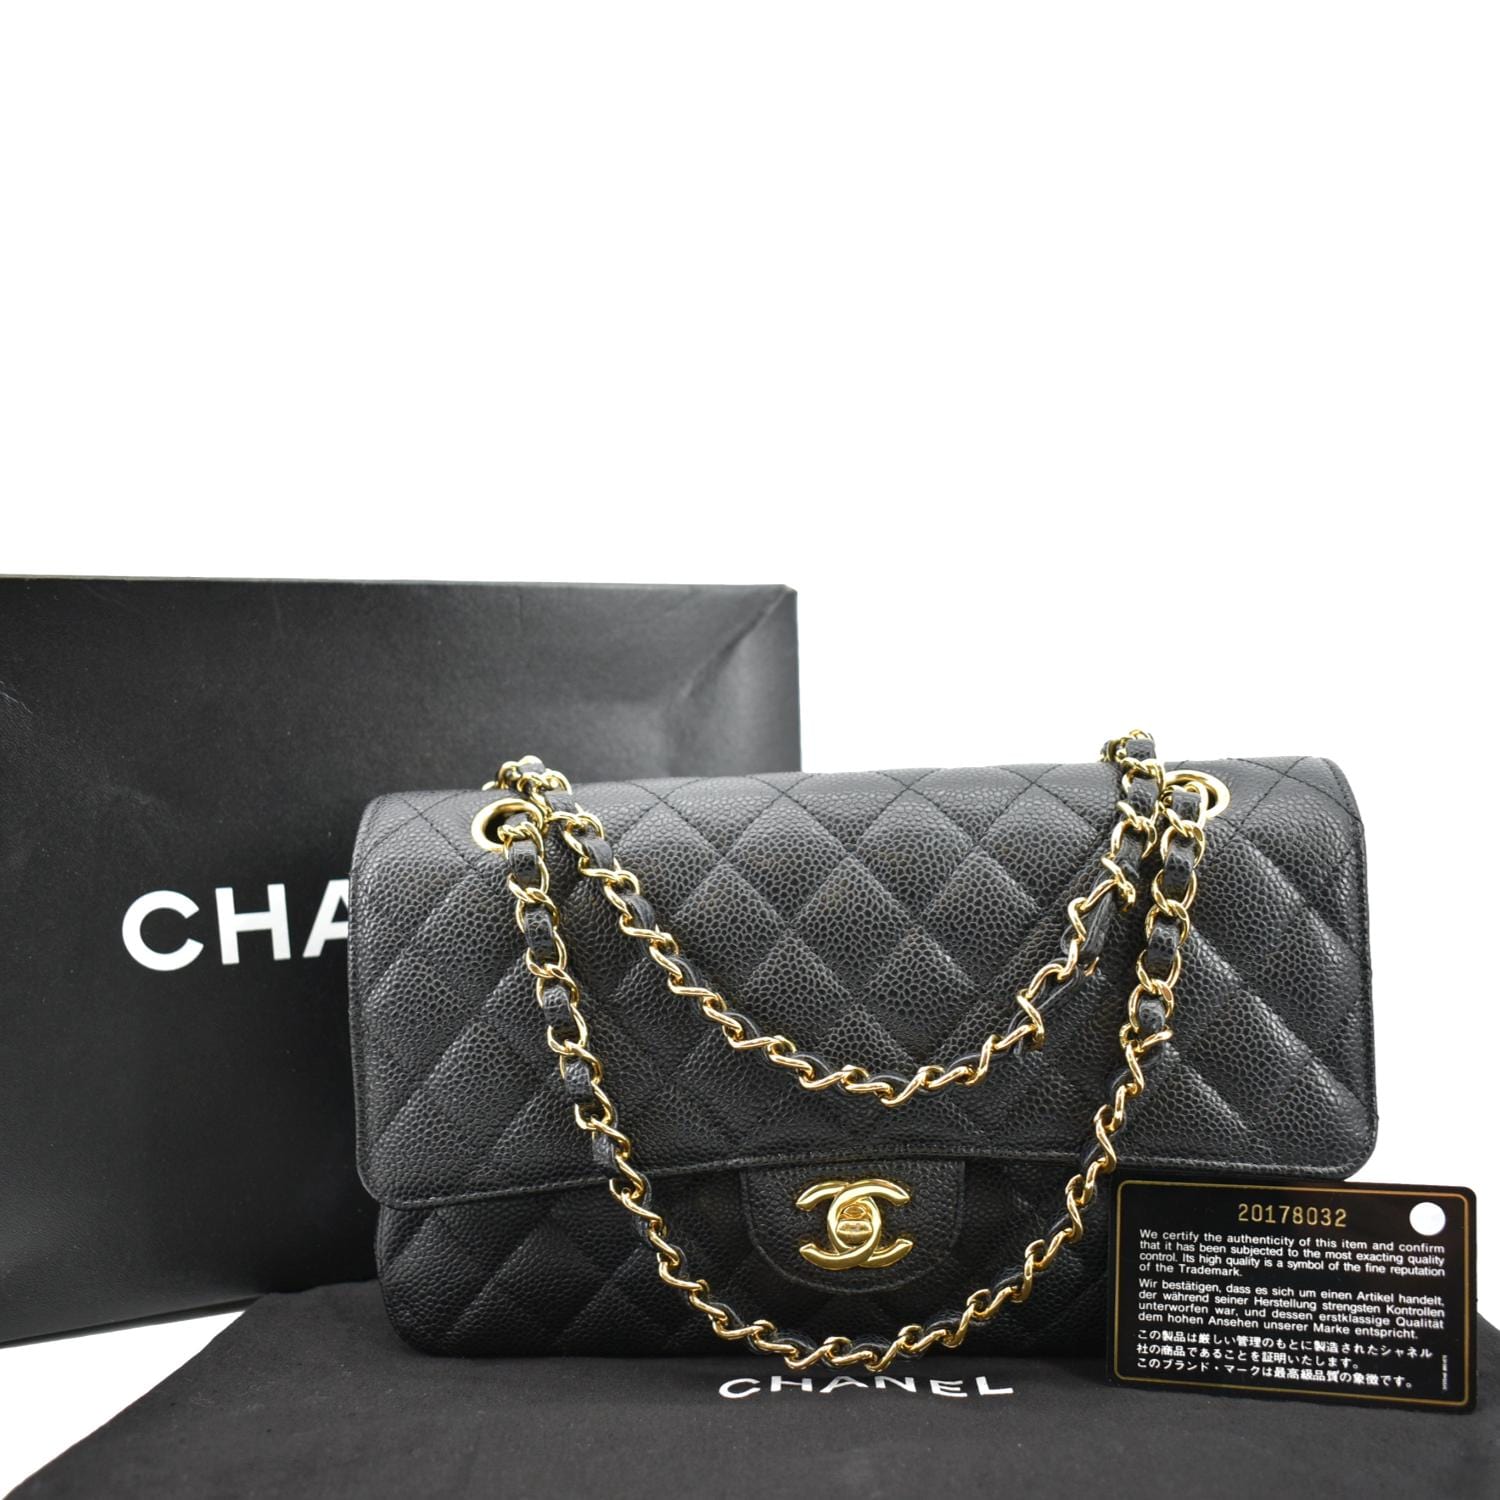 Where can I buy a 1:1 replica Chanel bag? - Quora